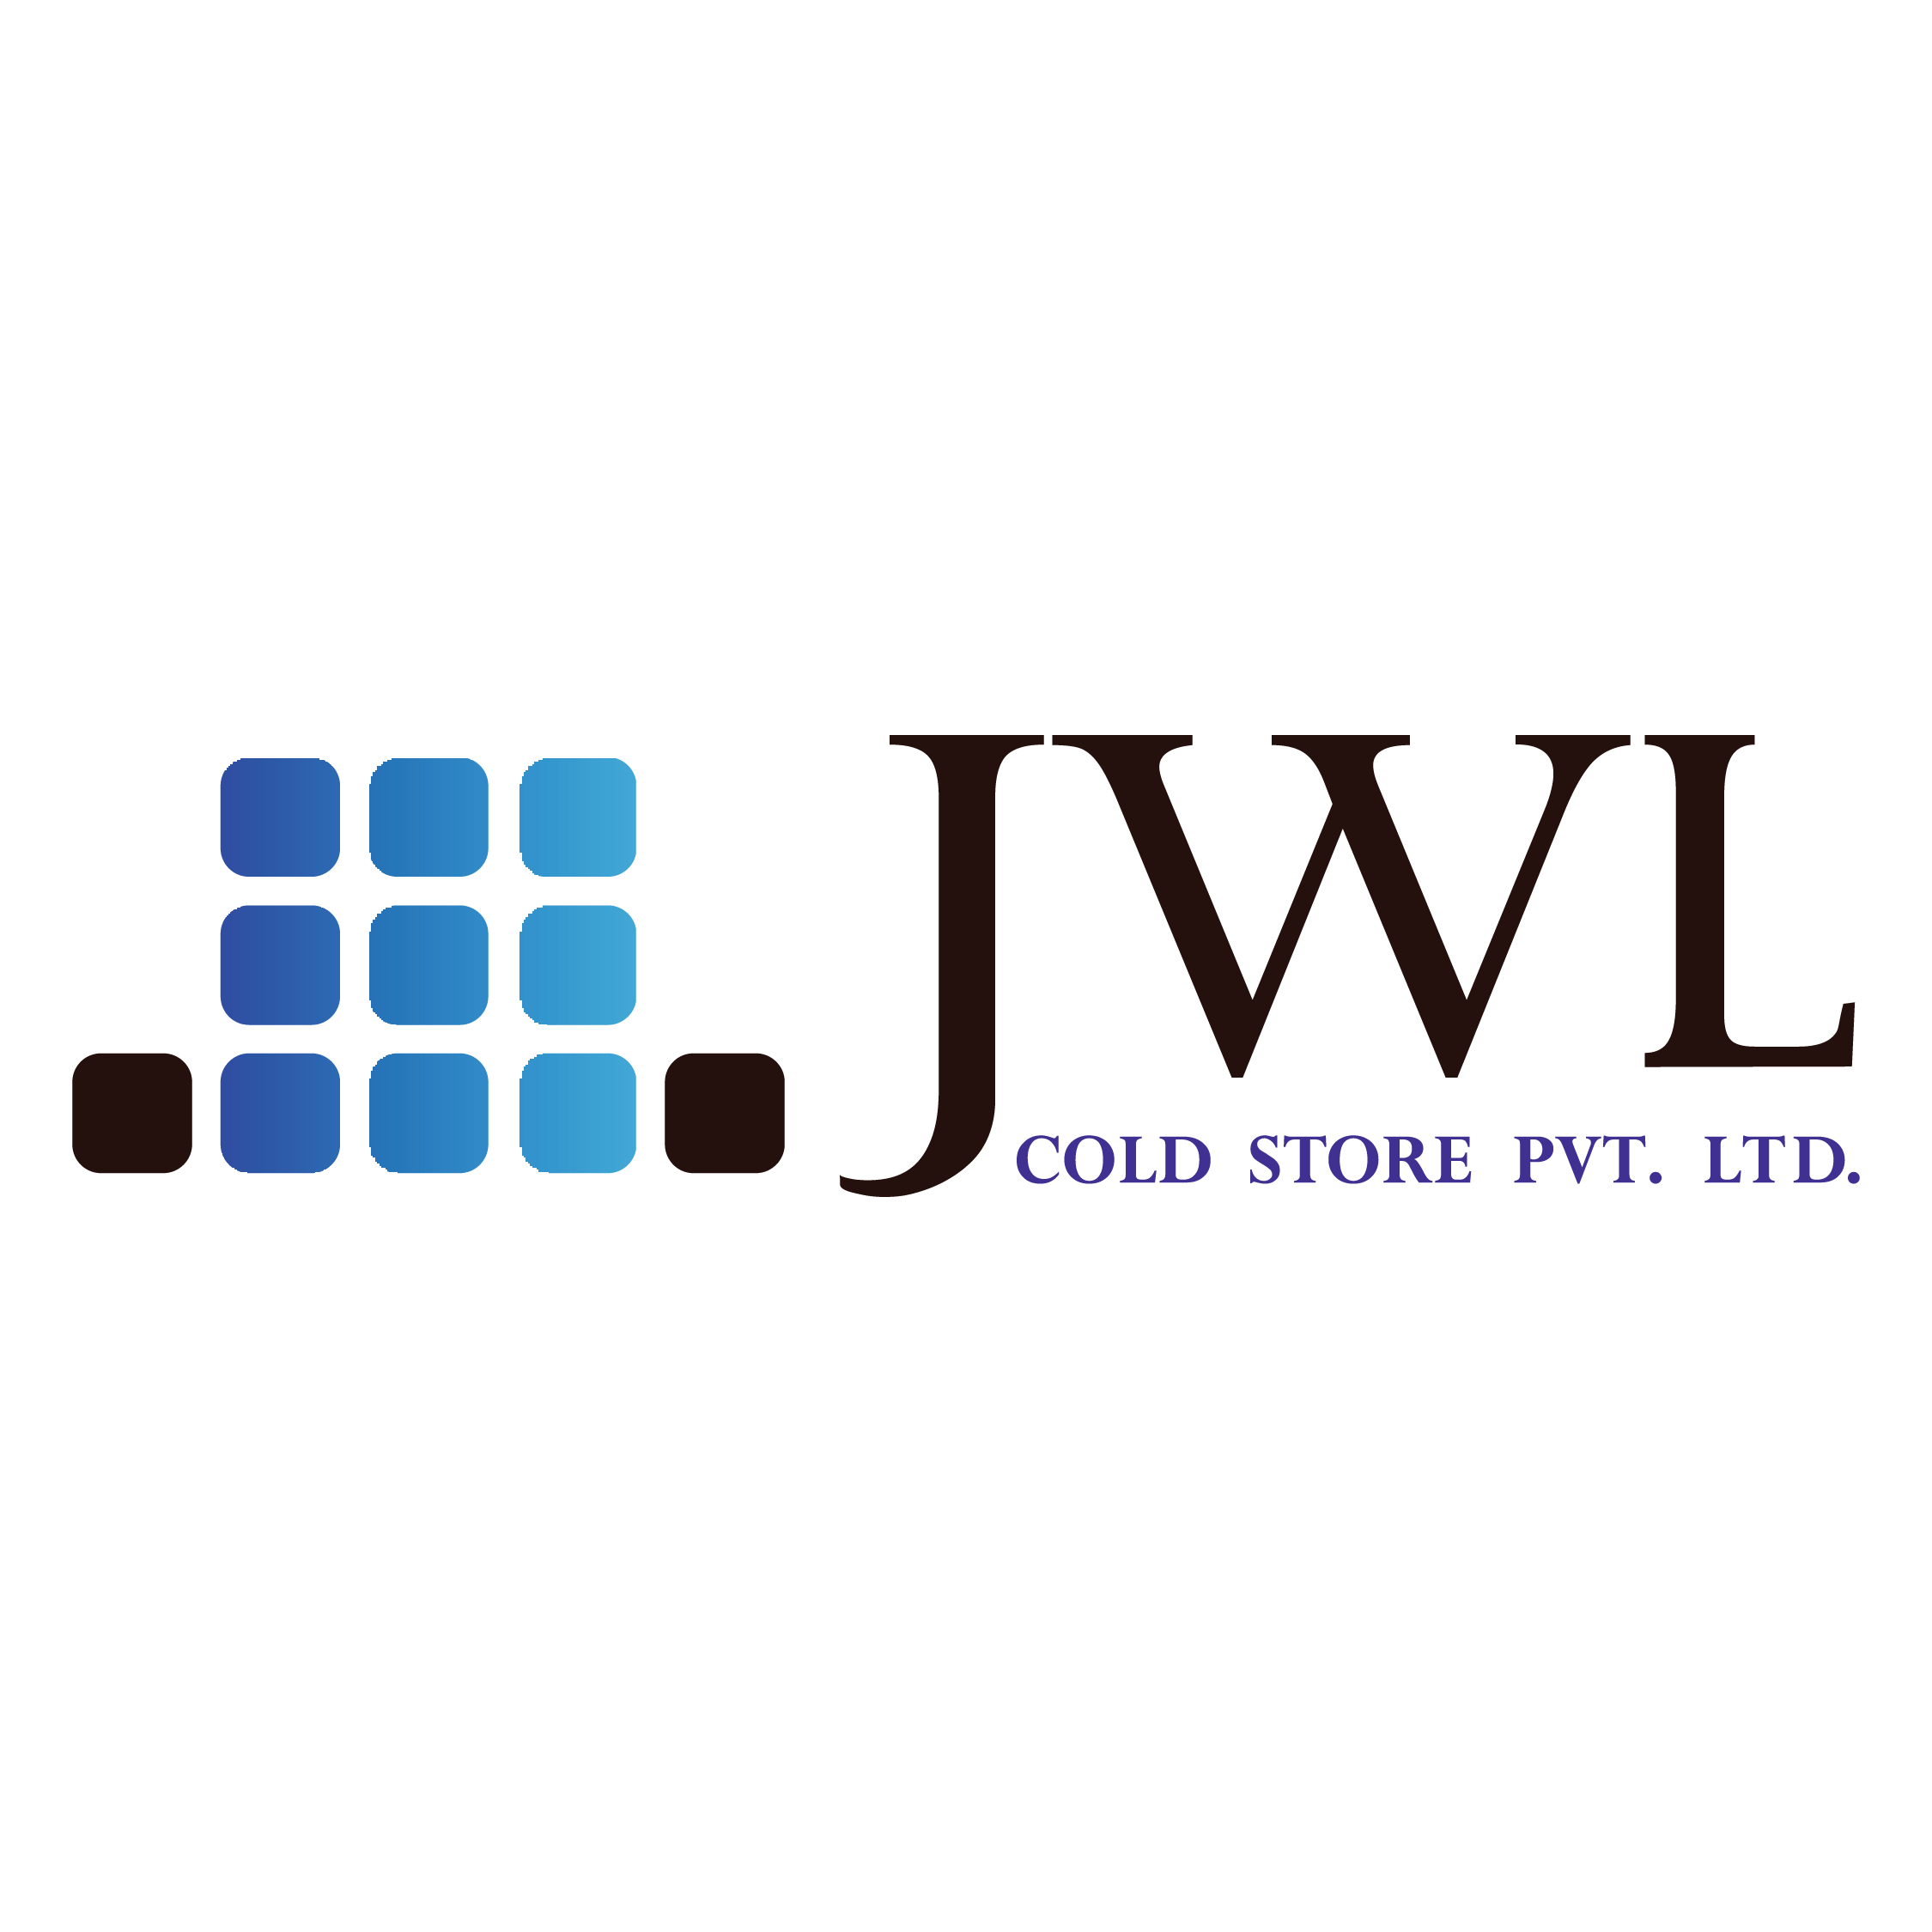 JWL COLD STORE PVT. LTD.